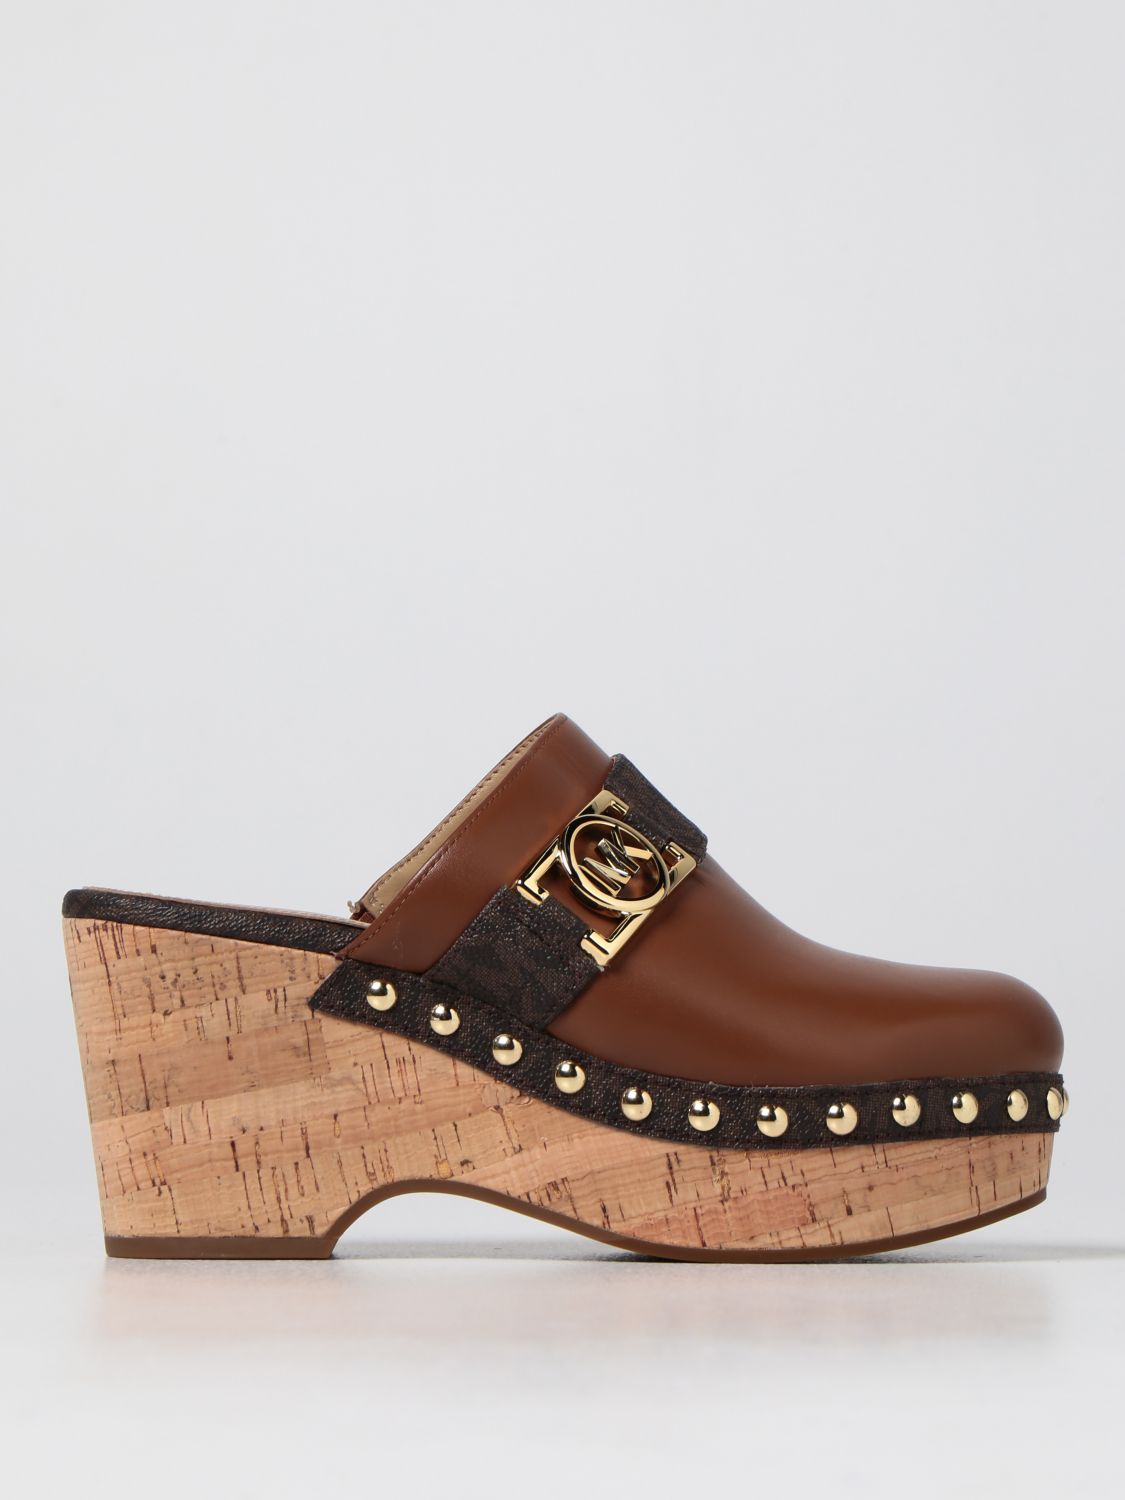 MICHAEL KORS: Michael leather clog - Leather | Michael Kors high heel shoes  40R2APMP1L online on 